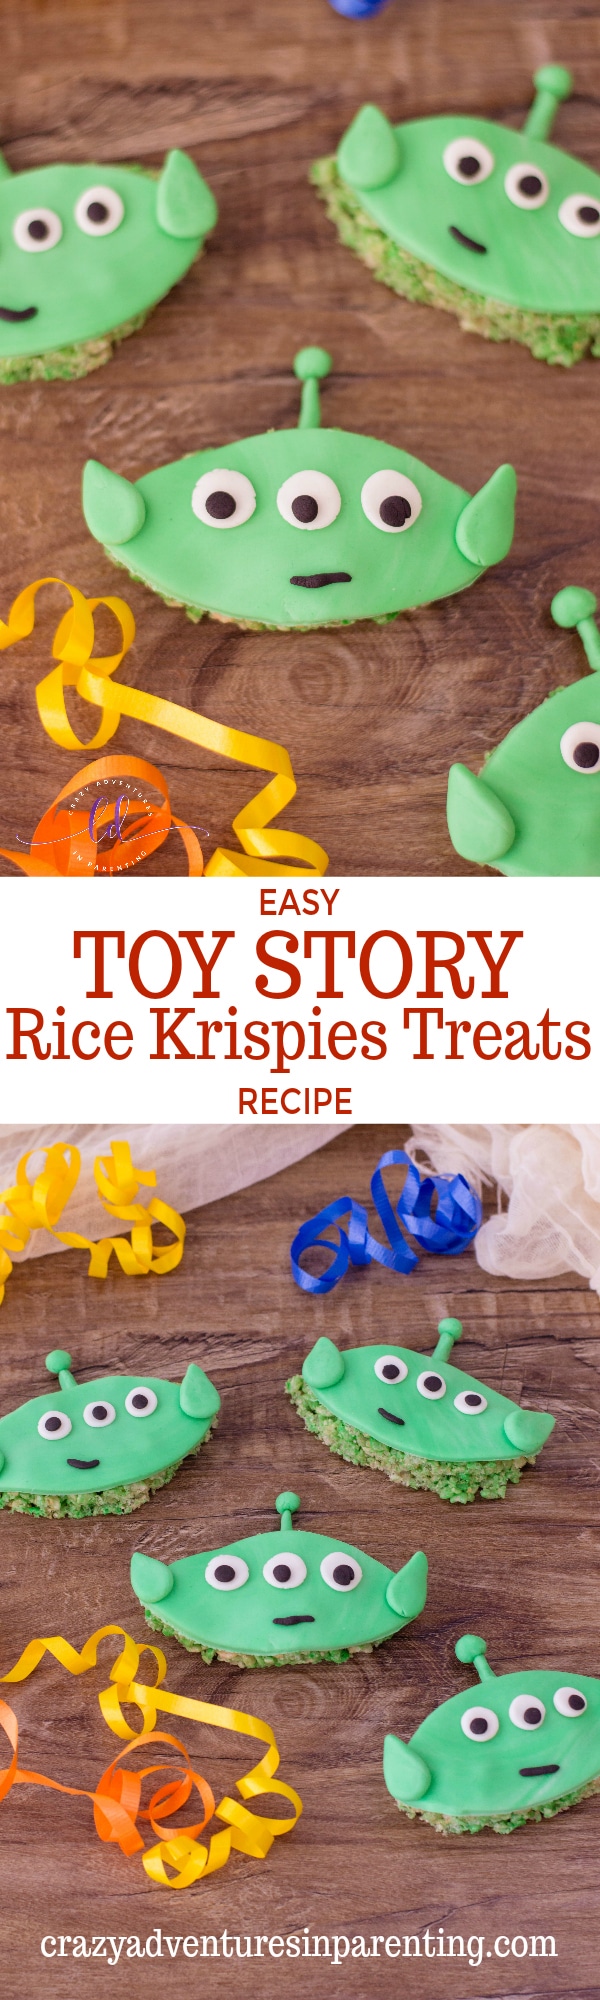 Easy Toy Story Rice Krispies Treats Recipe